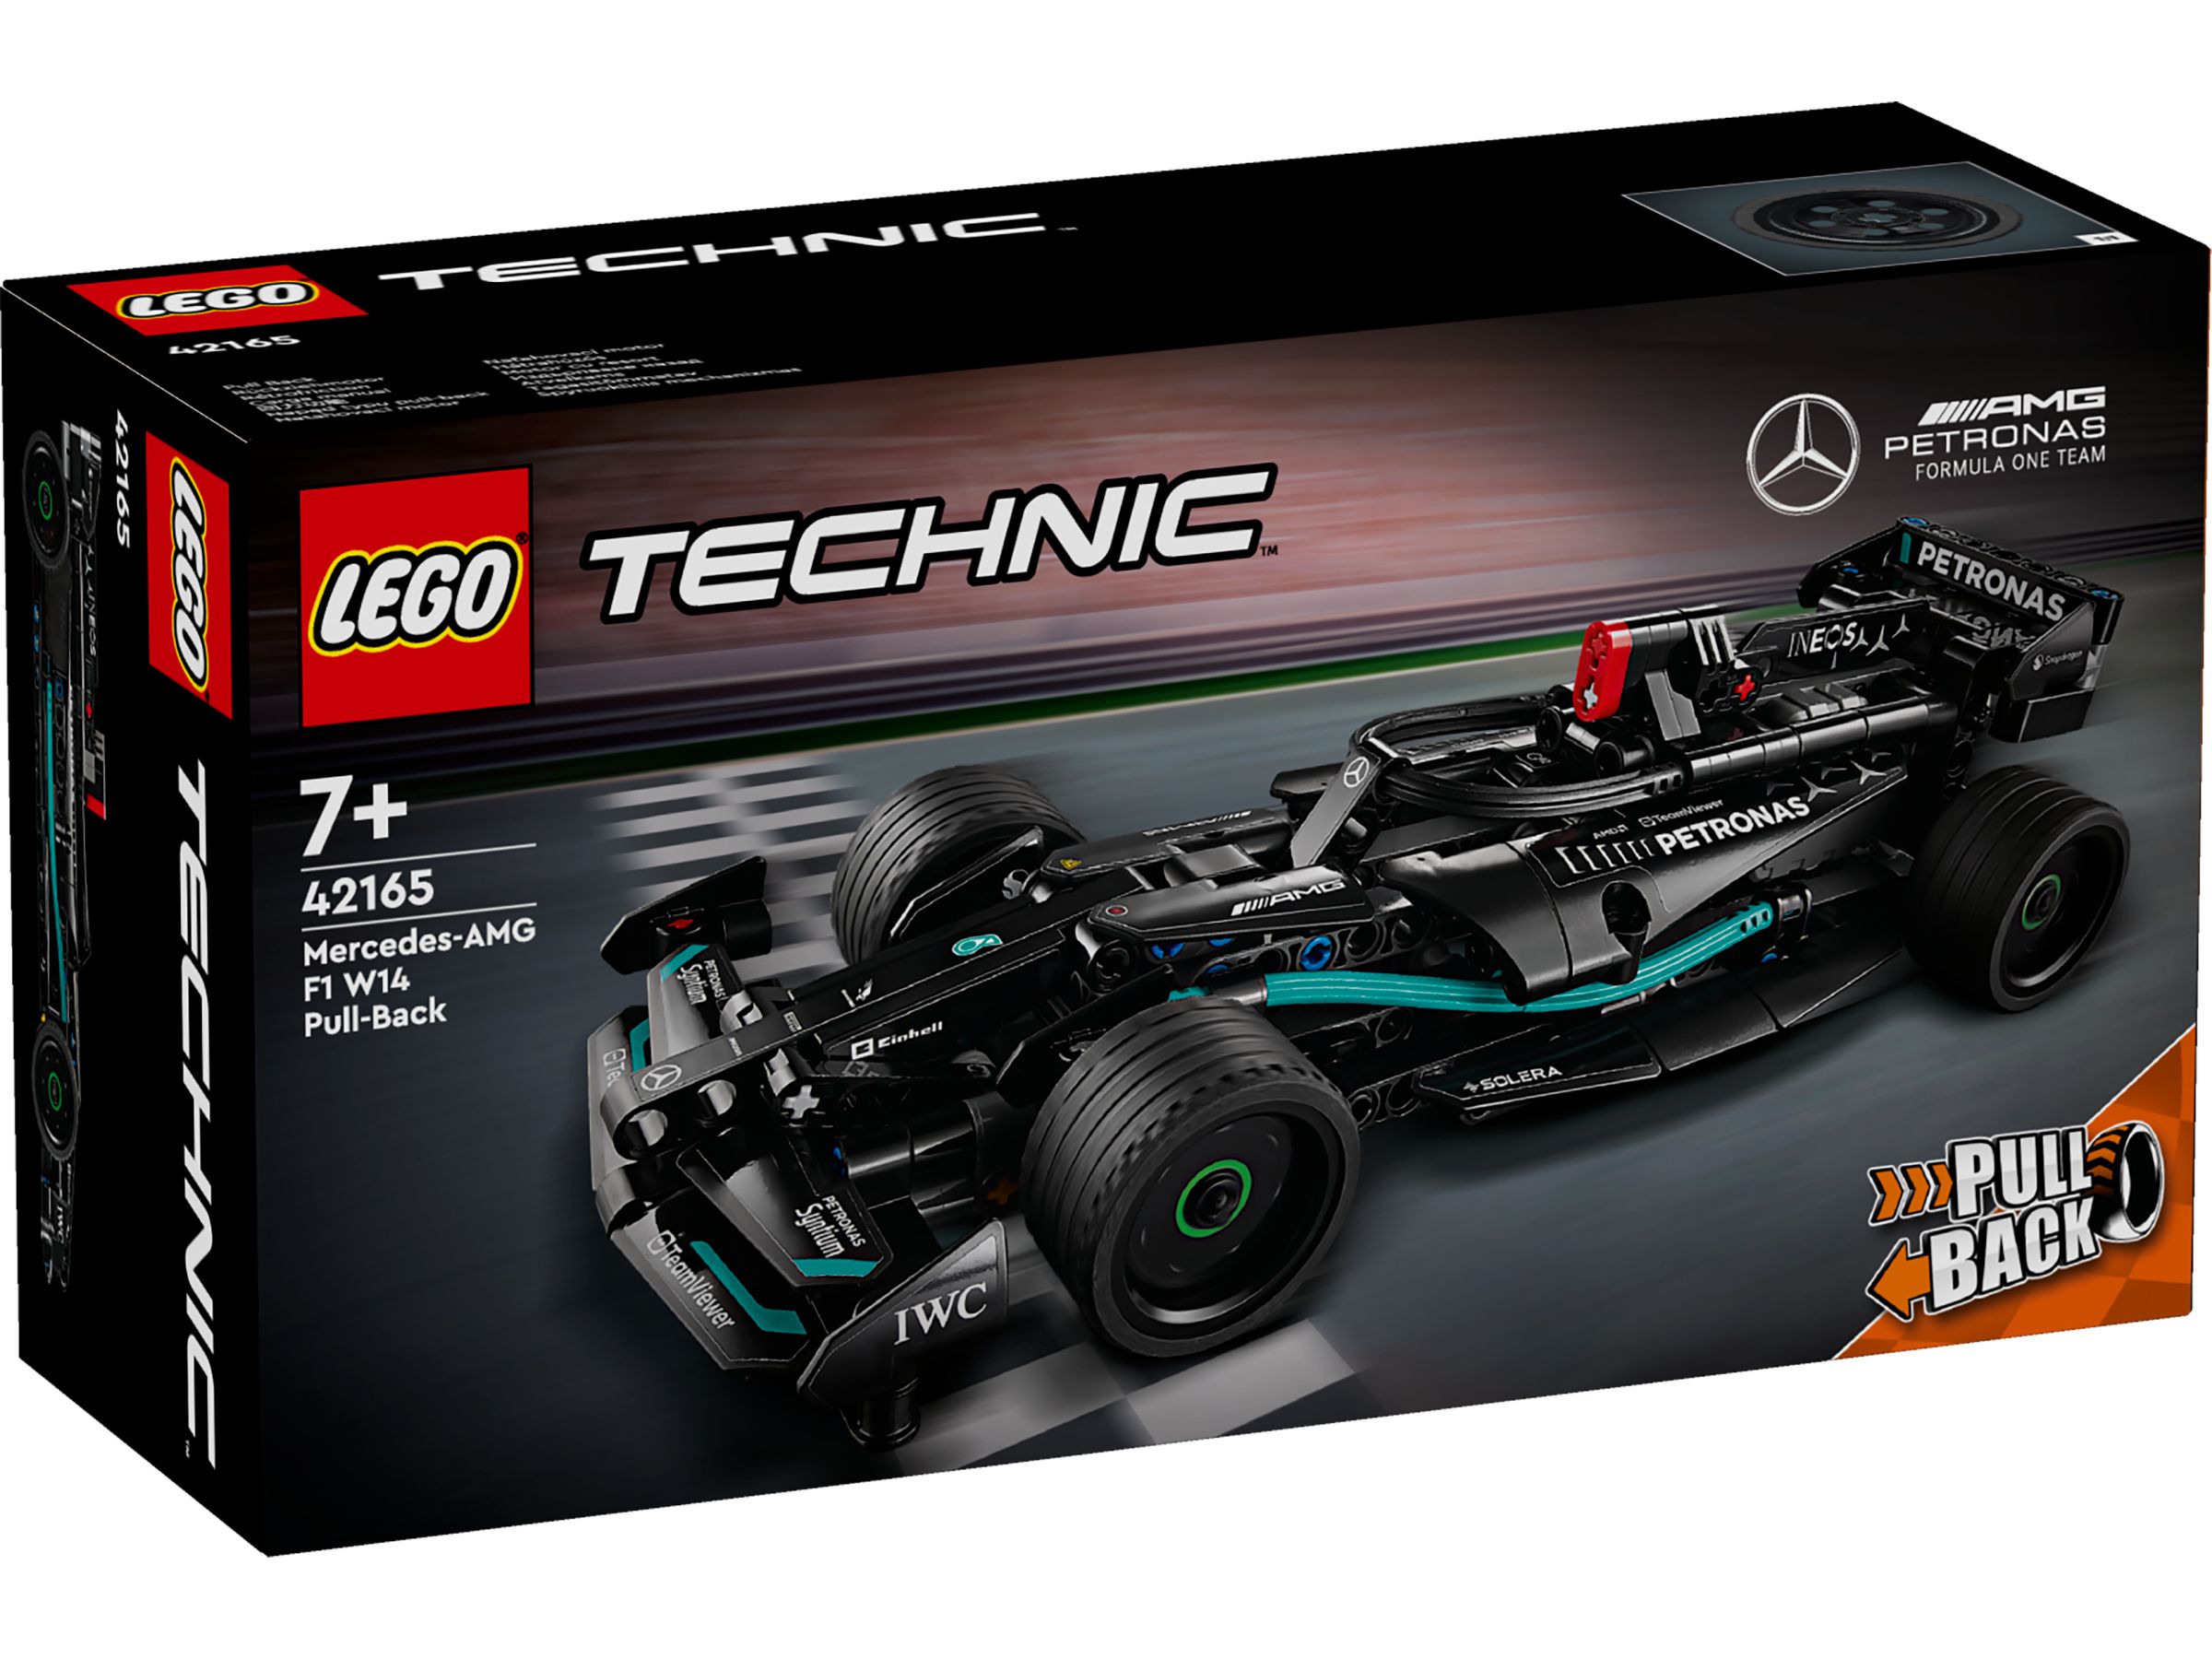 LEGO Technic 42165 Mercedes-AMG F1 W14 E Performance Pull-Back LEGO_42165_Box1_v29.jpg